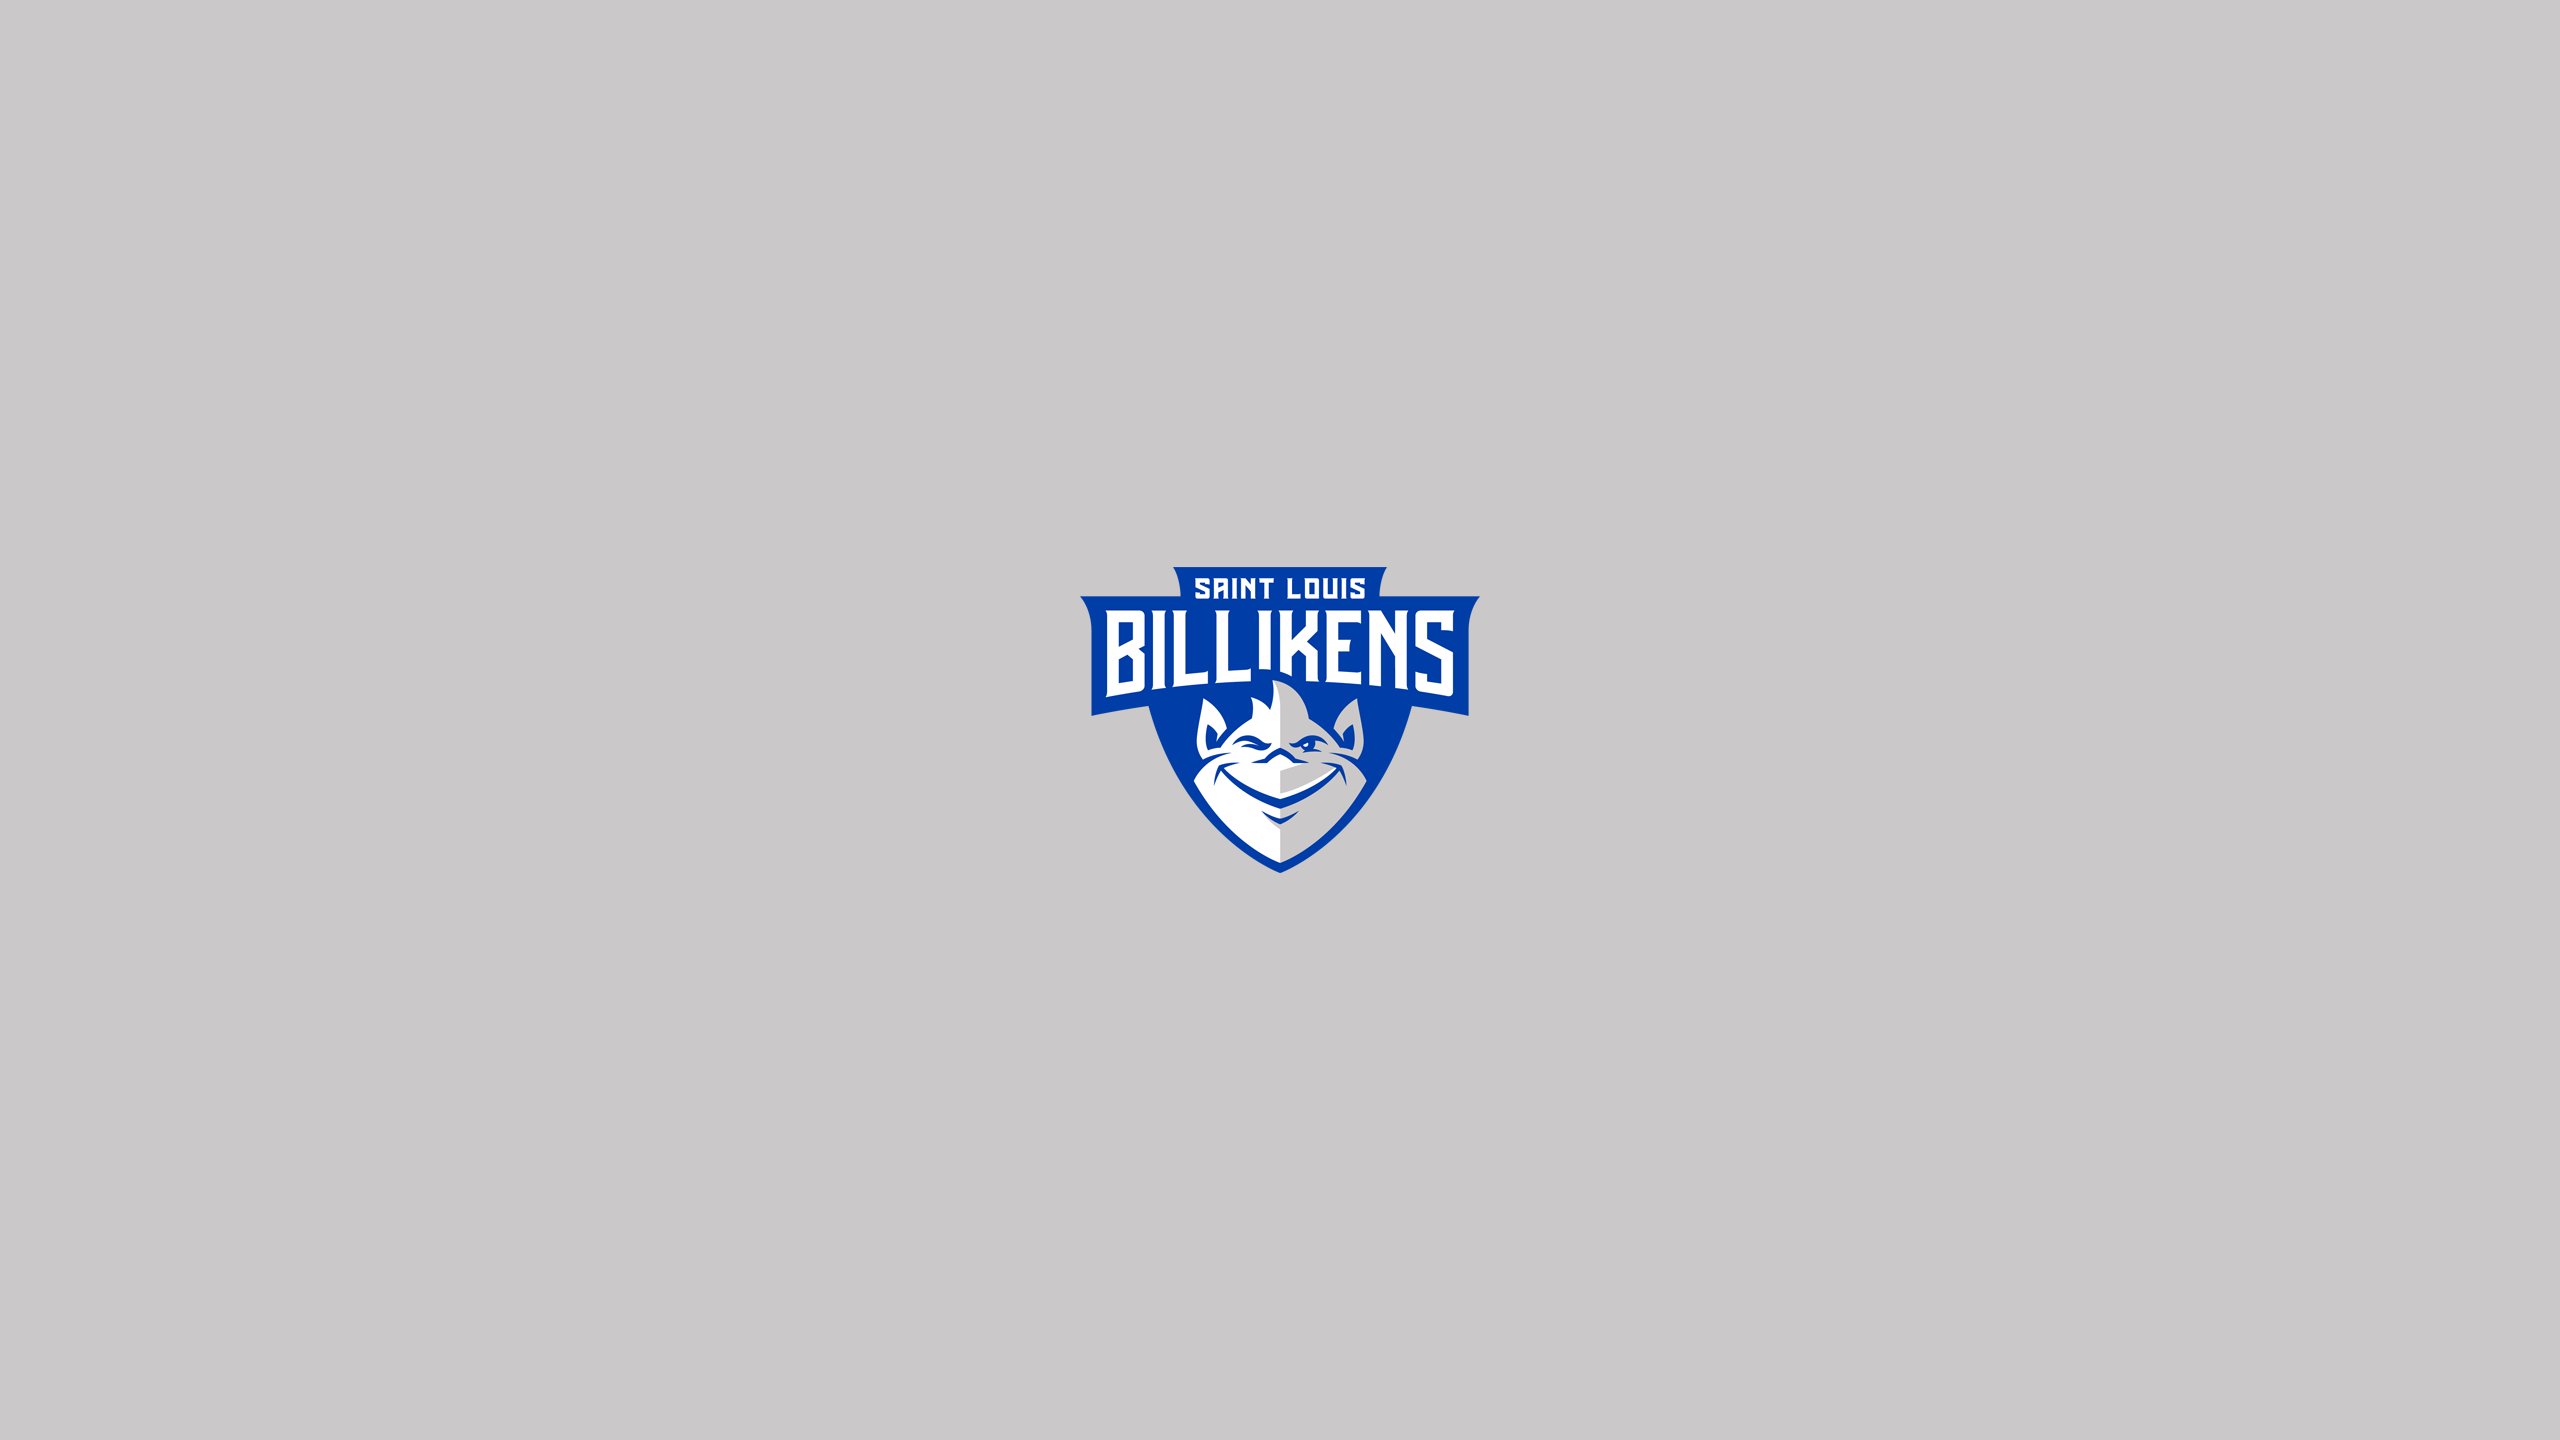 Saint Louis Billikens Basketball - NCAAB - Square Bettor